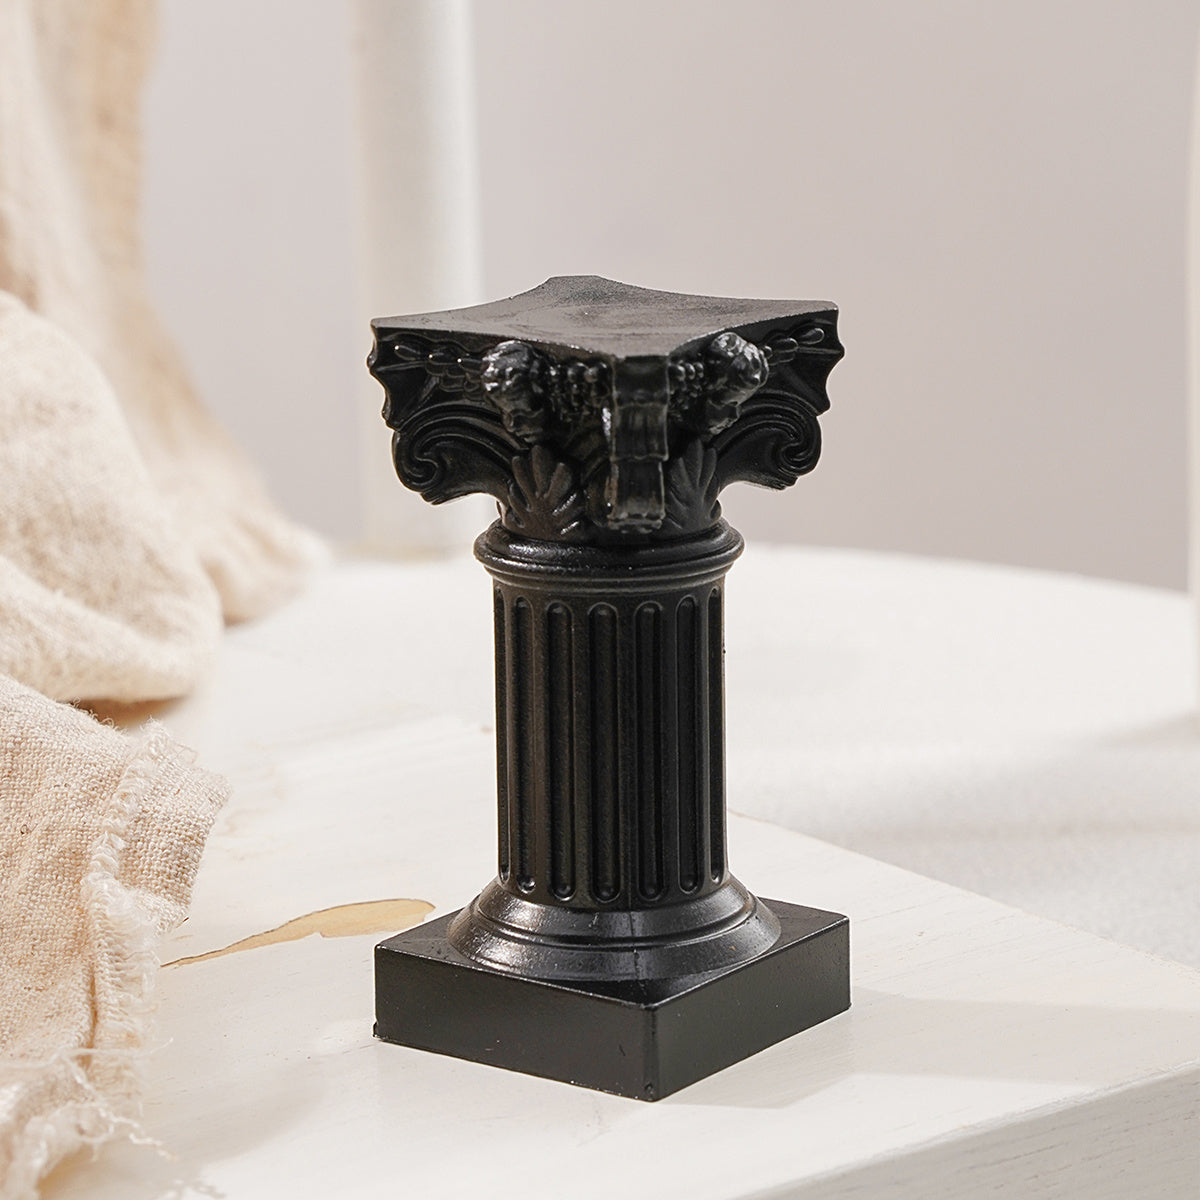 Nordic Style Plastic Roman Column Pendulum - Elegant Desktop Decoration for Home, Office, and Parties